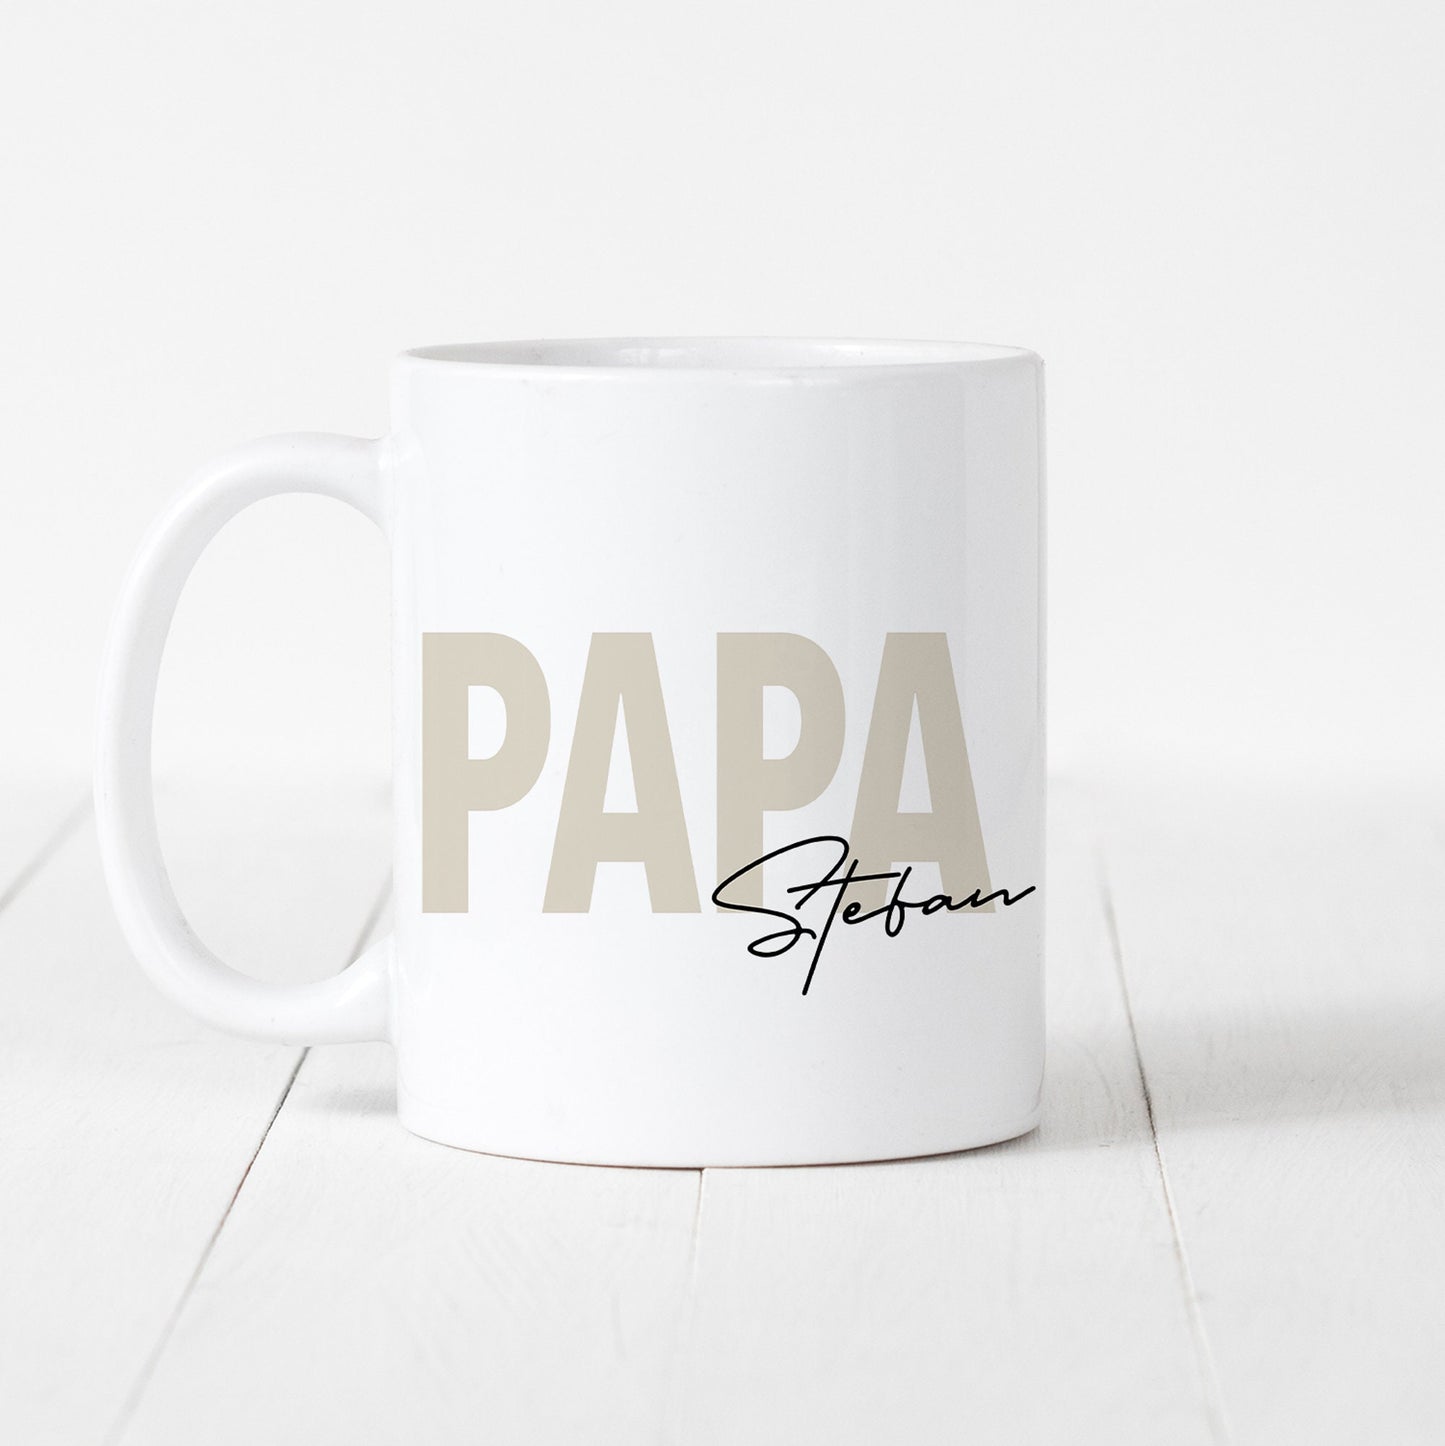 Papa Tasse Keramik Personalisiert mit Namen Verschiedene Farben Vater Geschenk Geburtstag Vatertag Vatertagsgeschenk